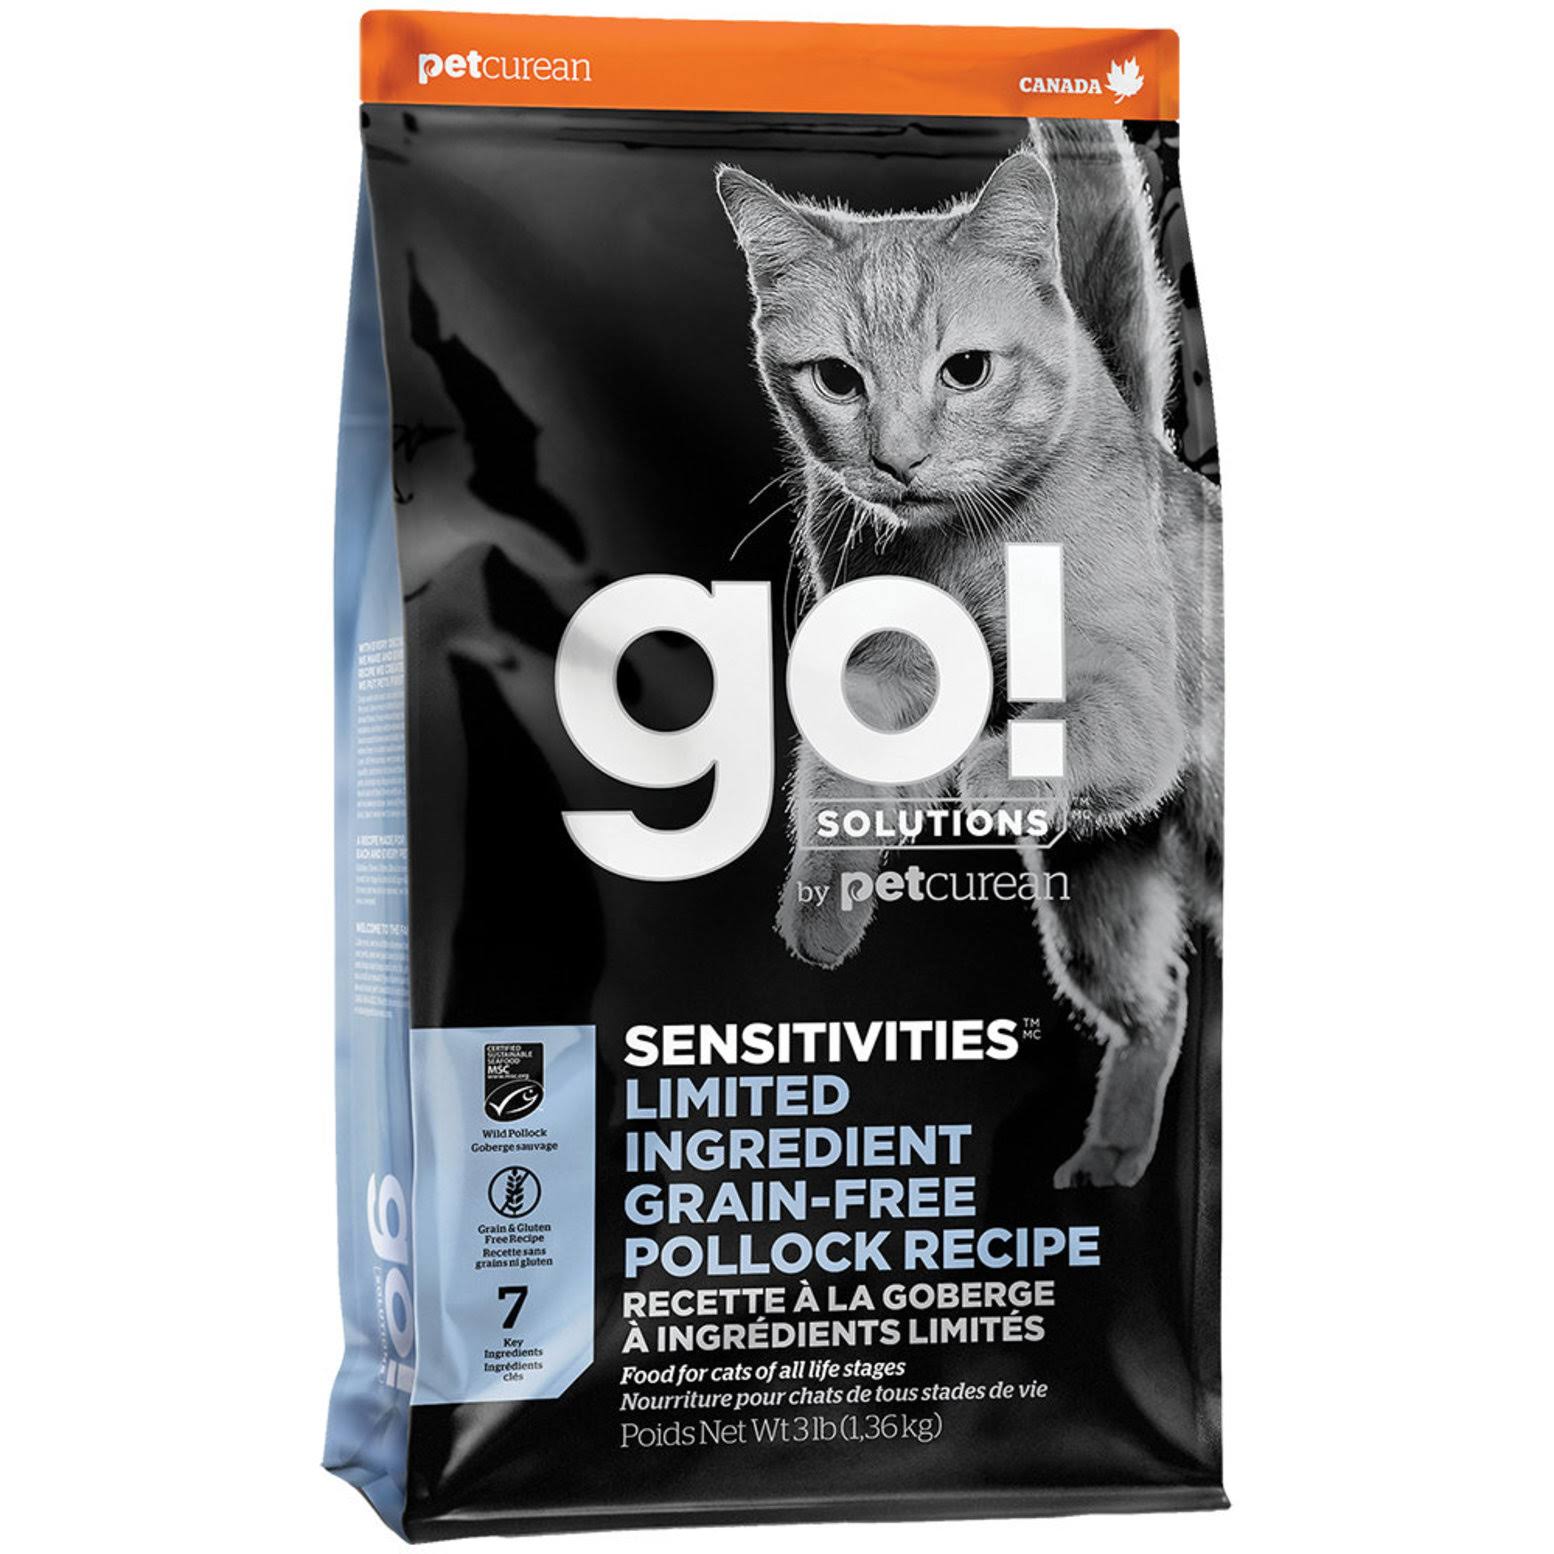 Go! Solutions Sensitivities Limited Ingredient Pollock Grain-Free Dry Cat Food, 8-lb